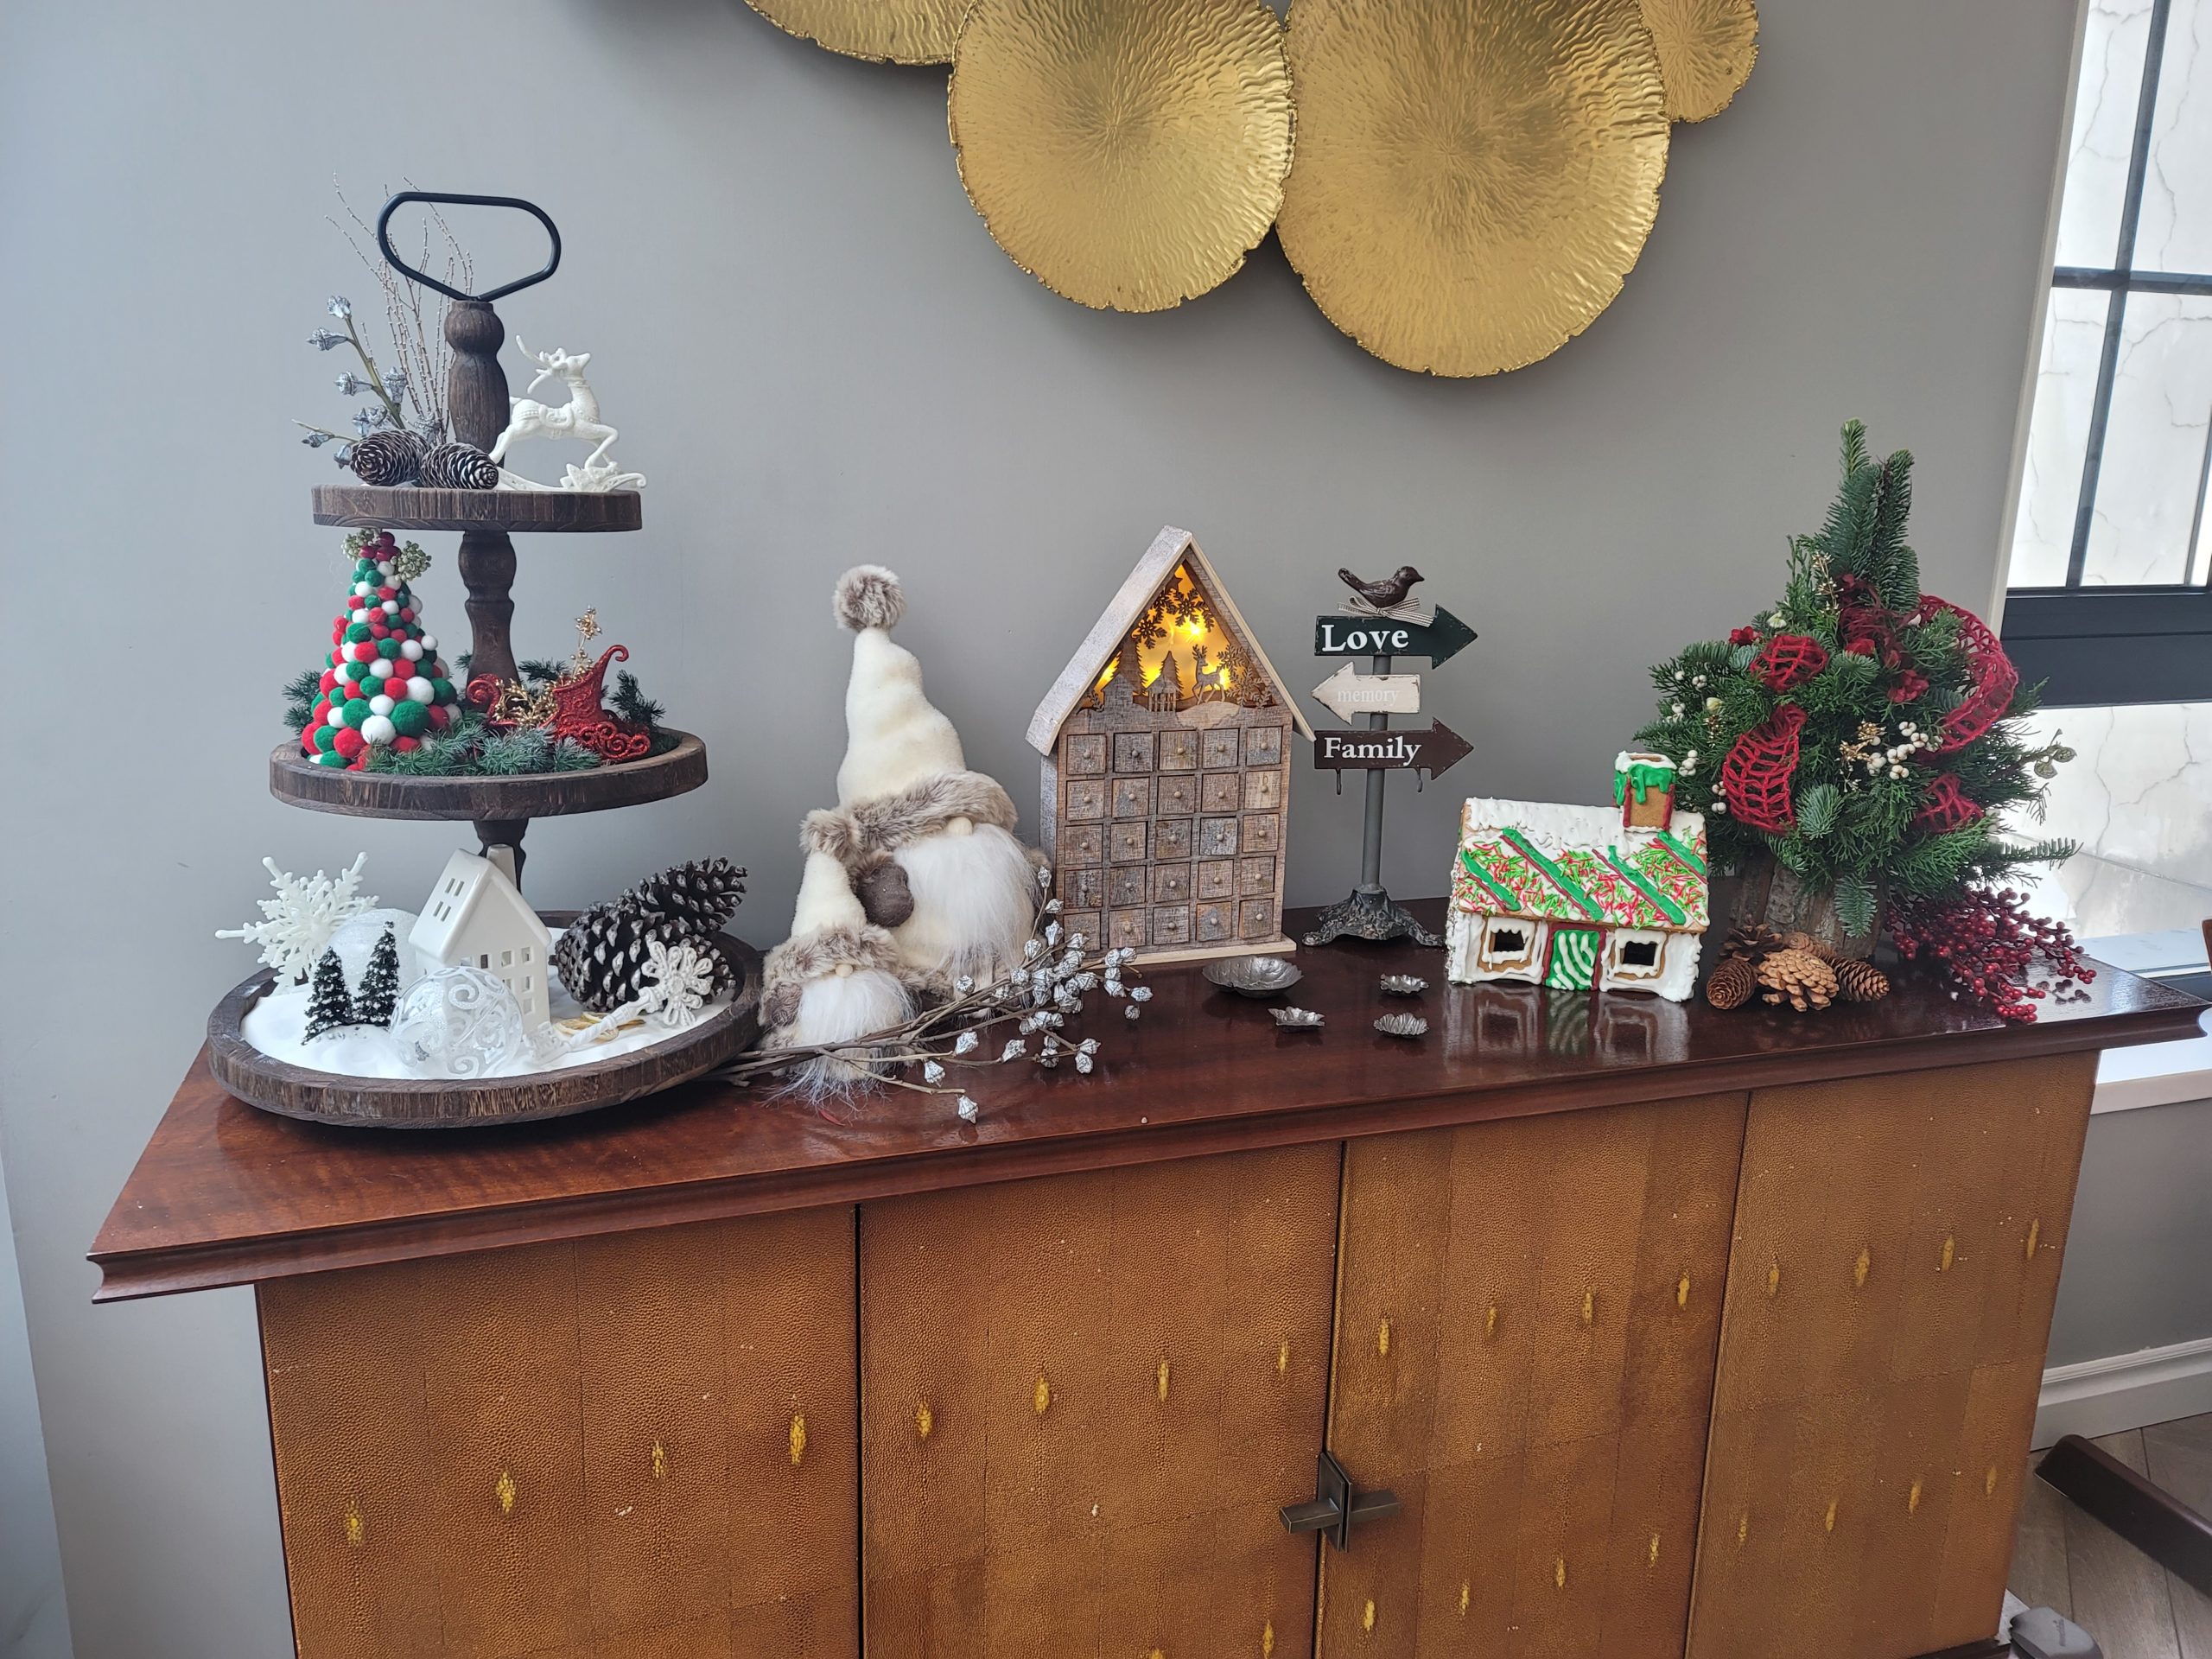 Festive Christmas decorations set-up on buffet